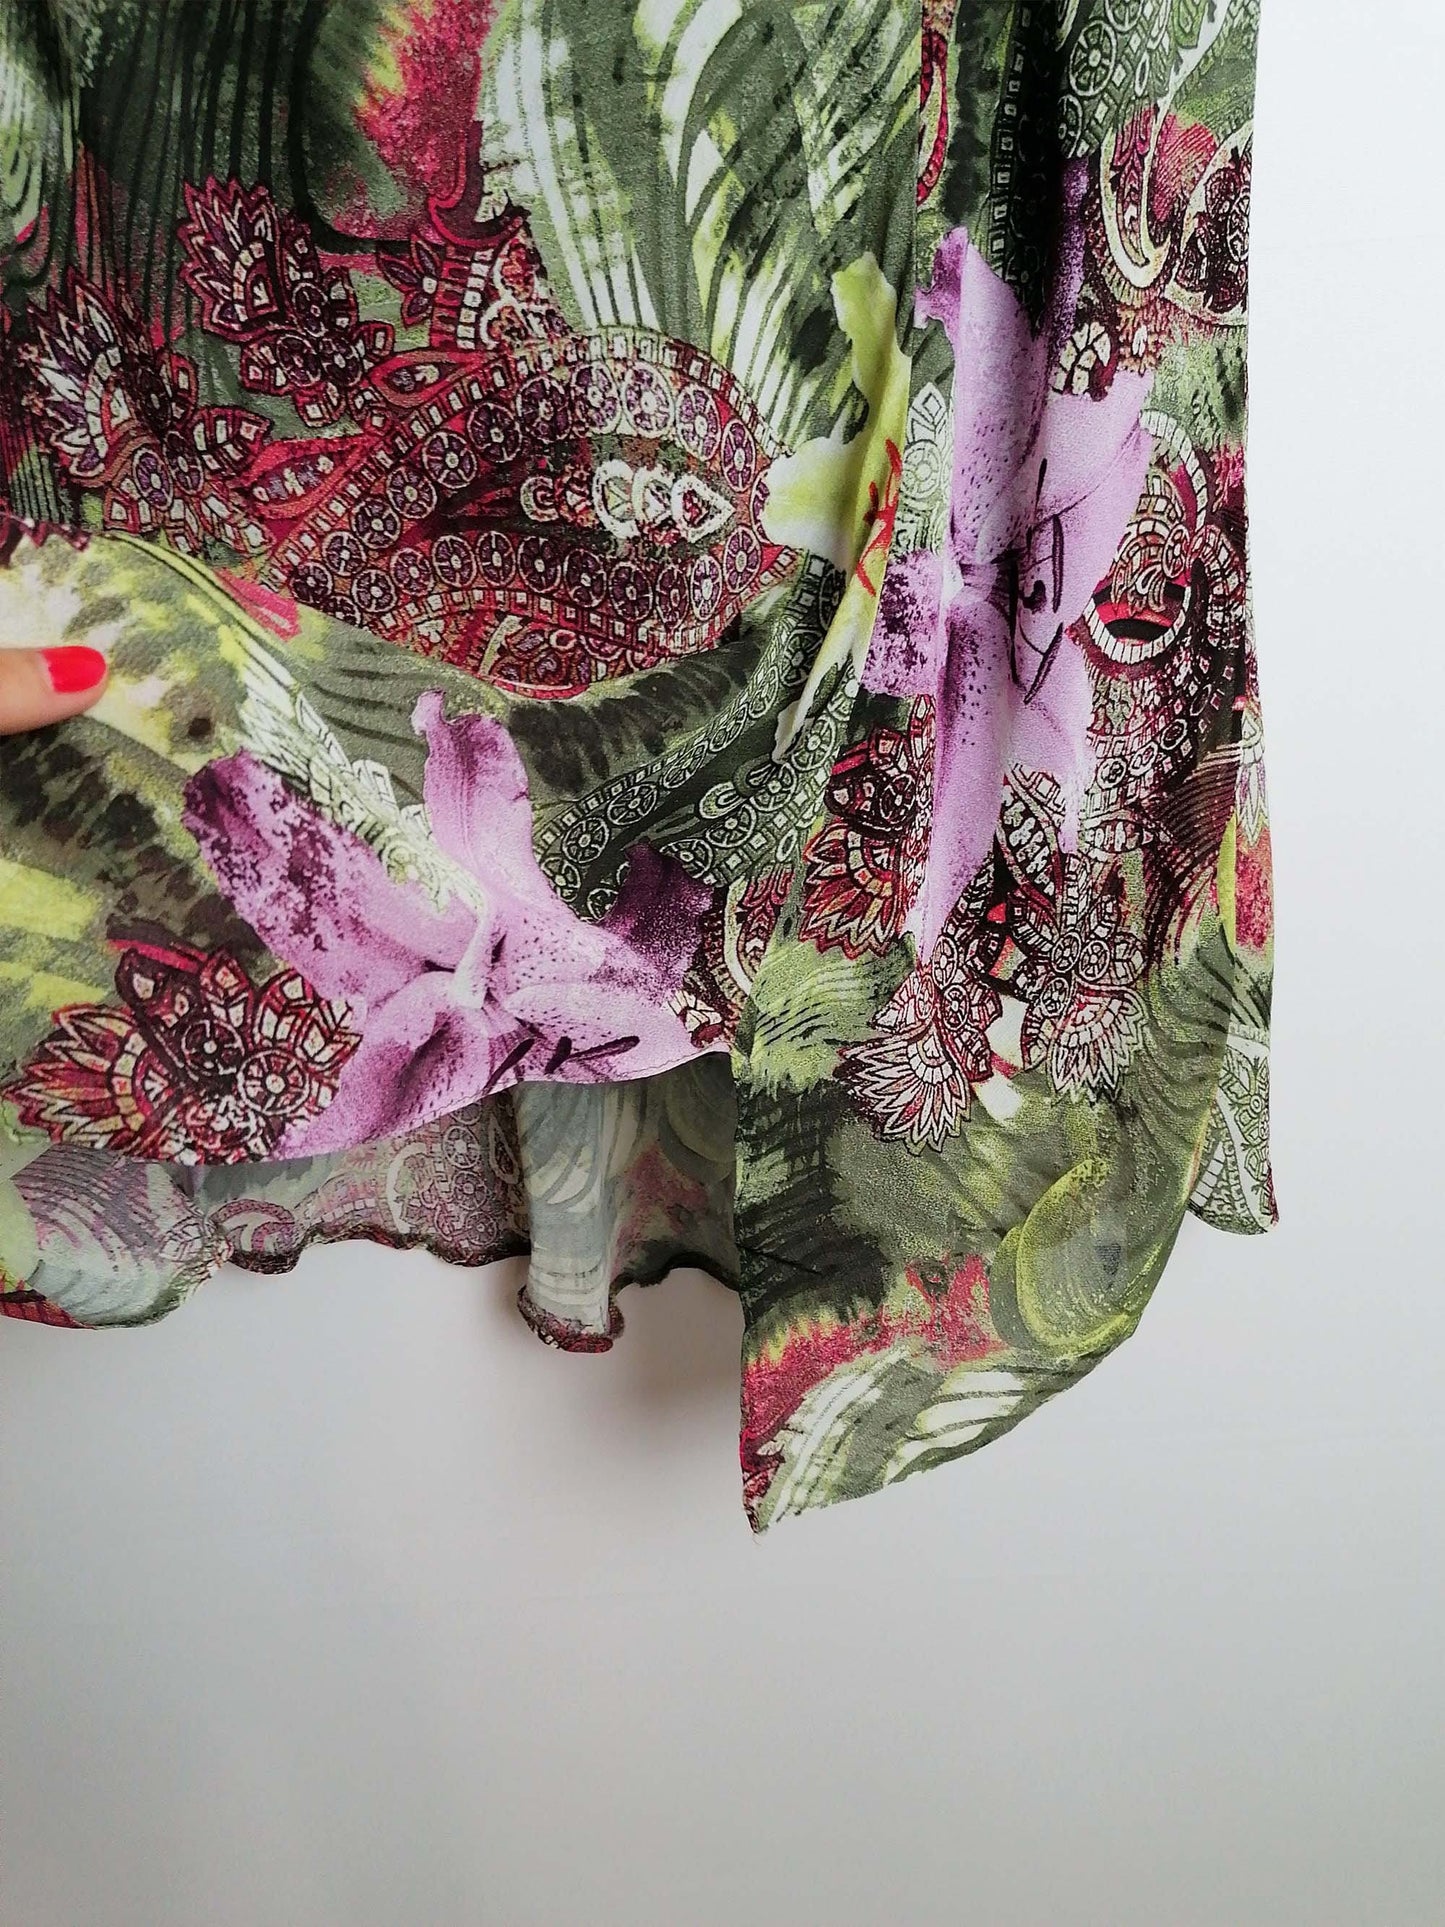 90's Y2K STEILMANN Asymmetric Skirt Floral Print - size M / D 38 / UK 12